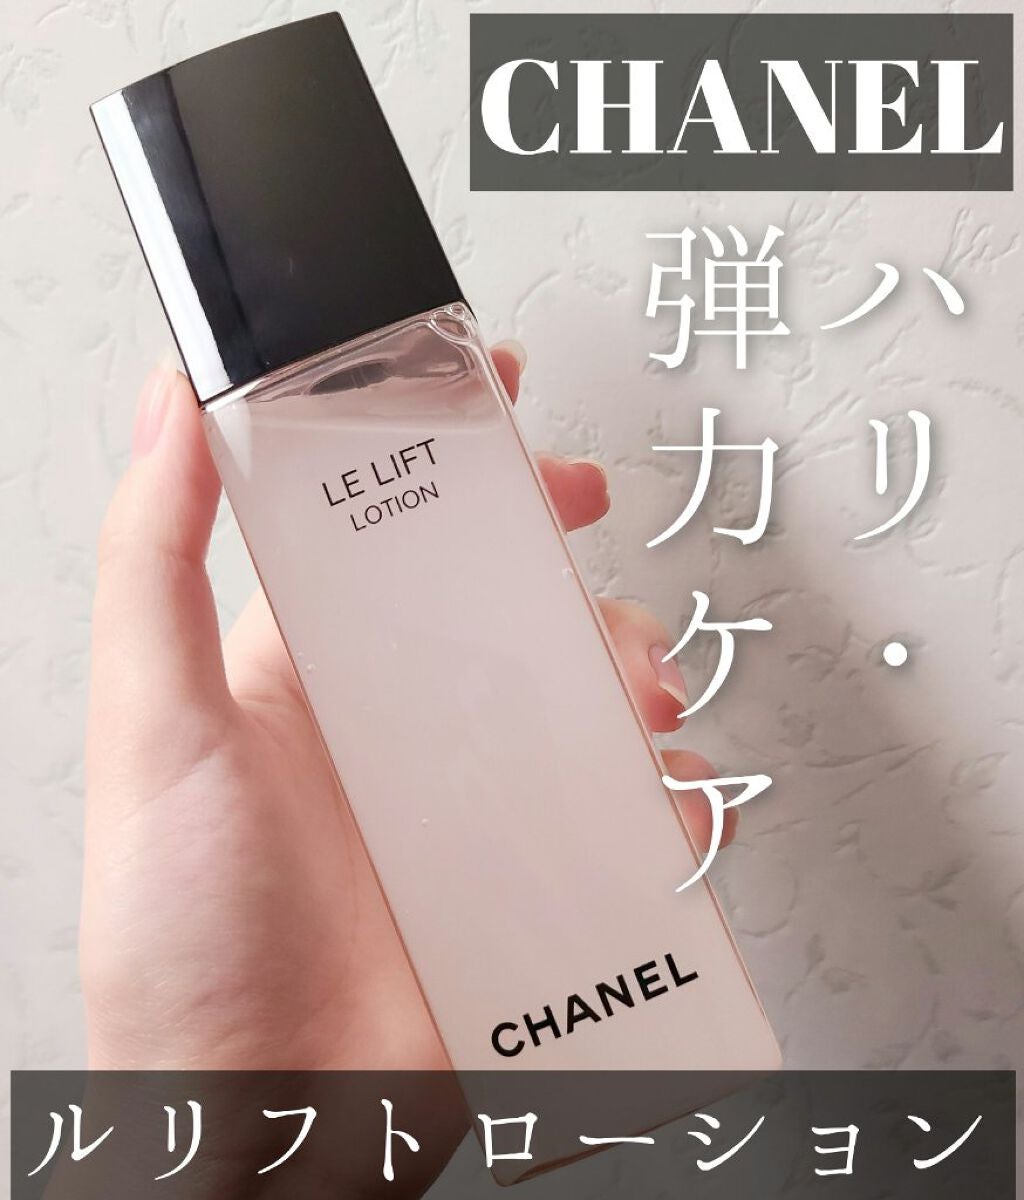 CHANEL ル リフト ローション - 化粧水/ローション